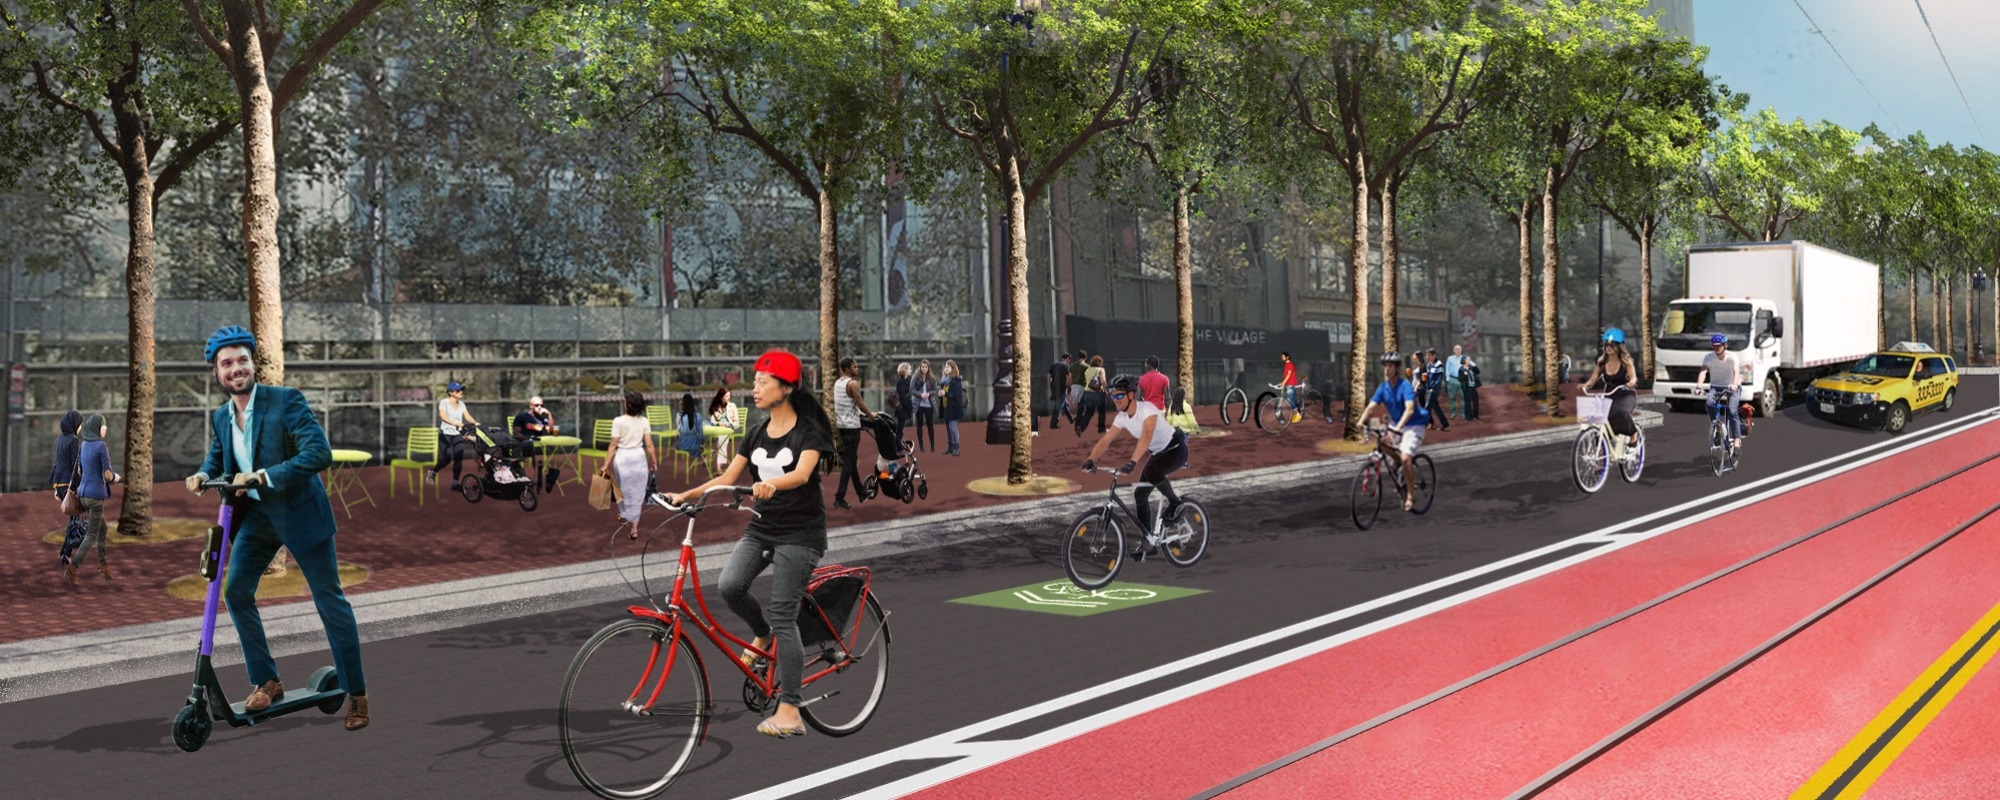 Rendering of Better Market Street Bike Lane Perspective